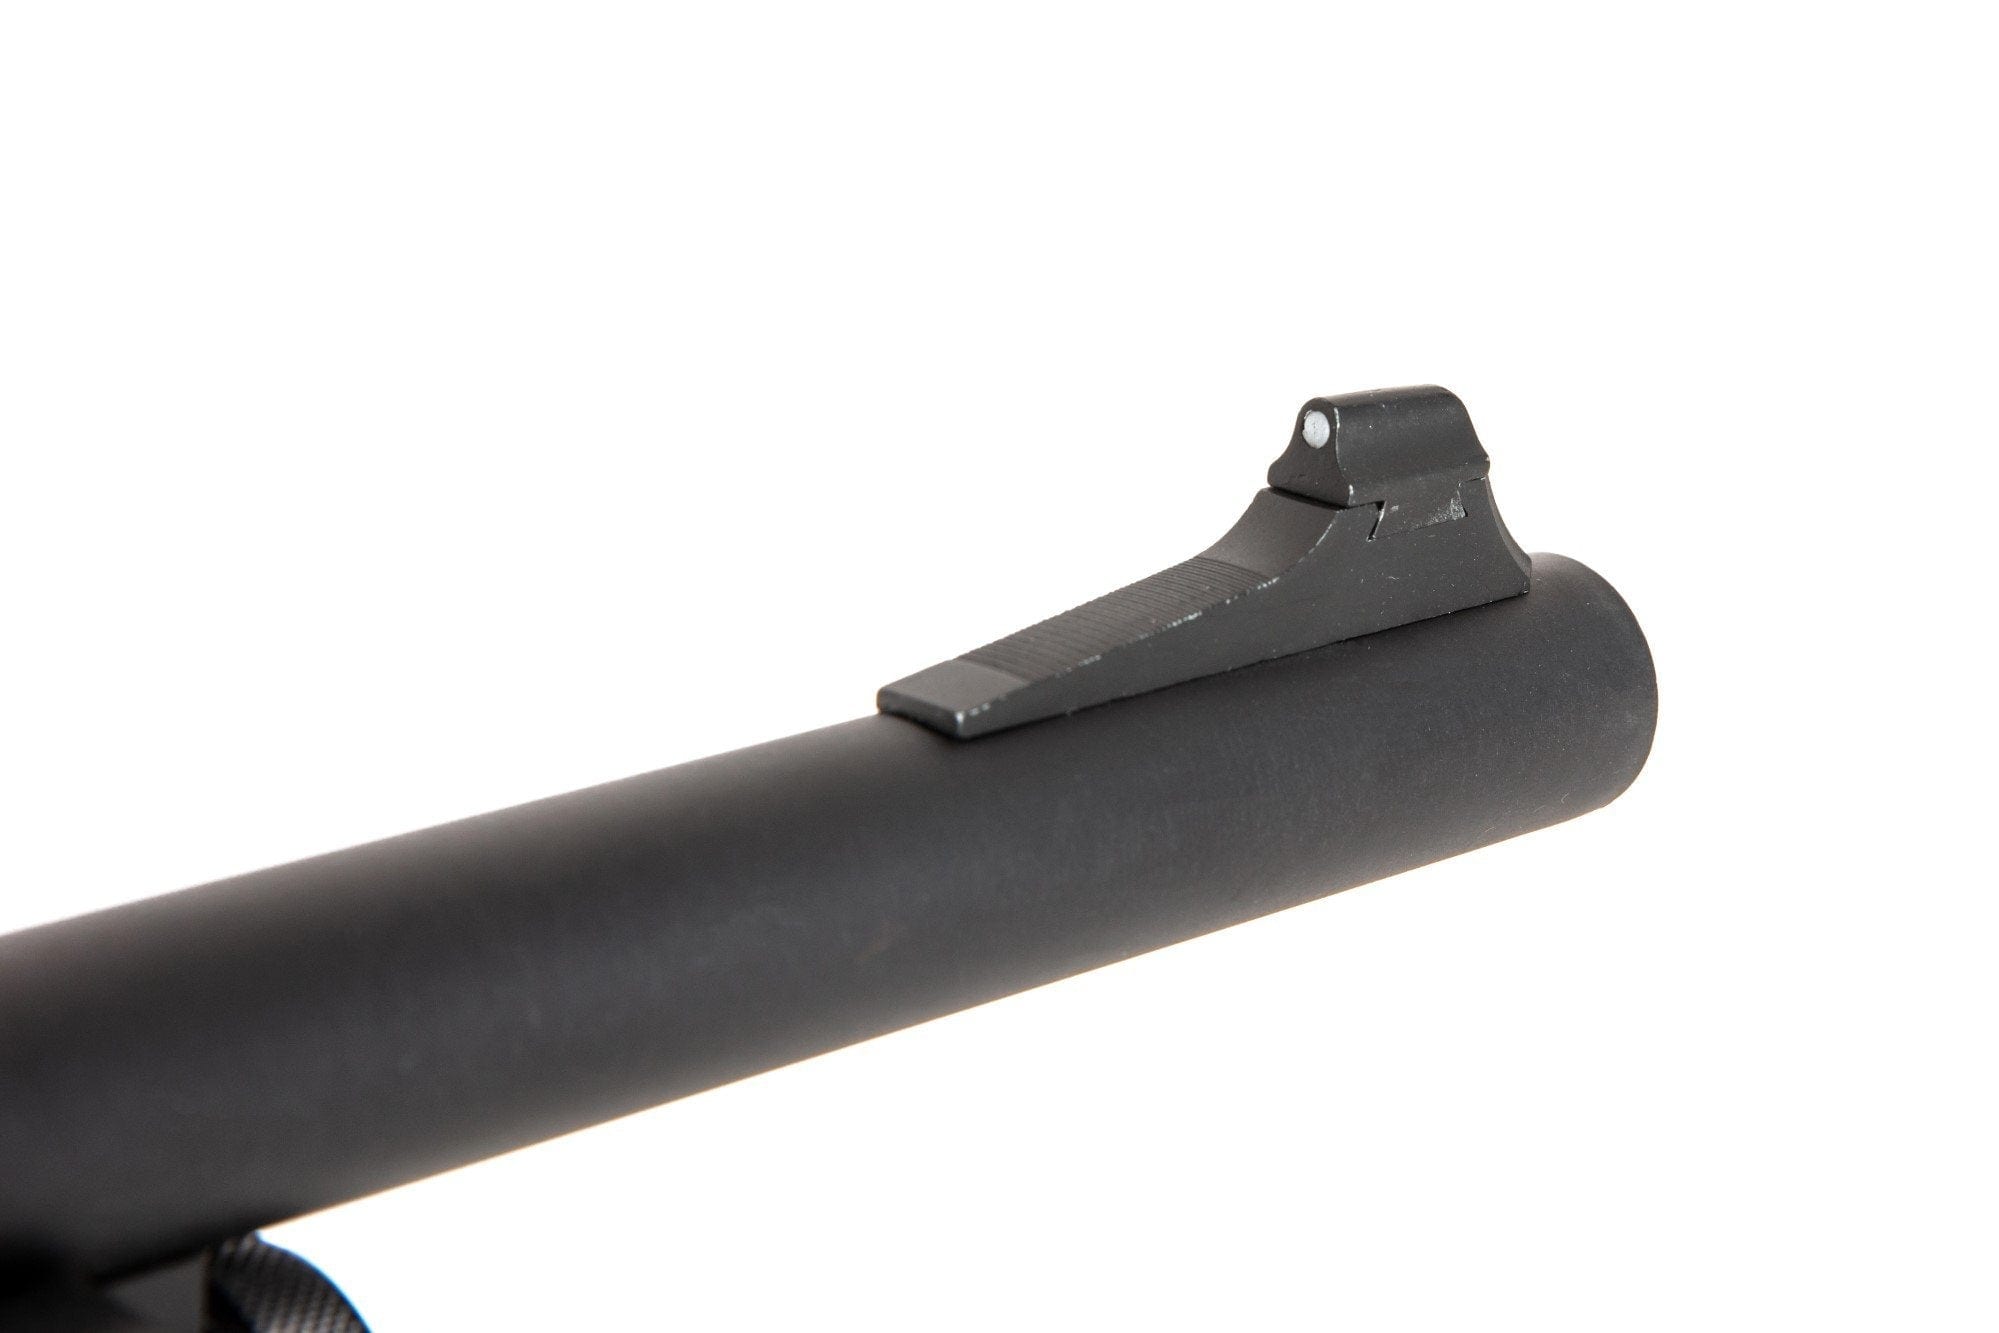 Shotgun Replica (8870) black